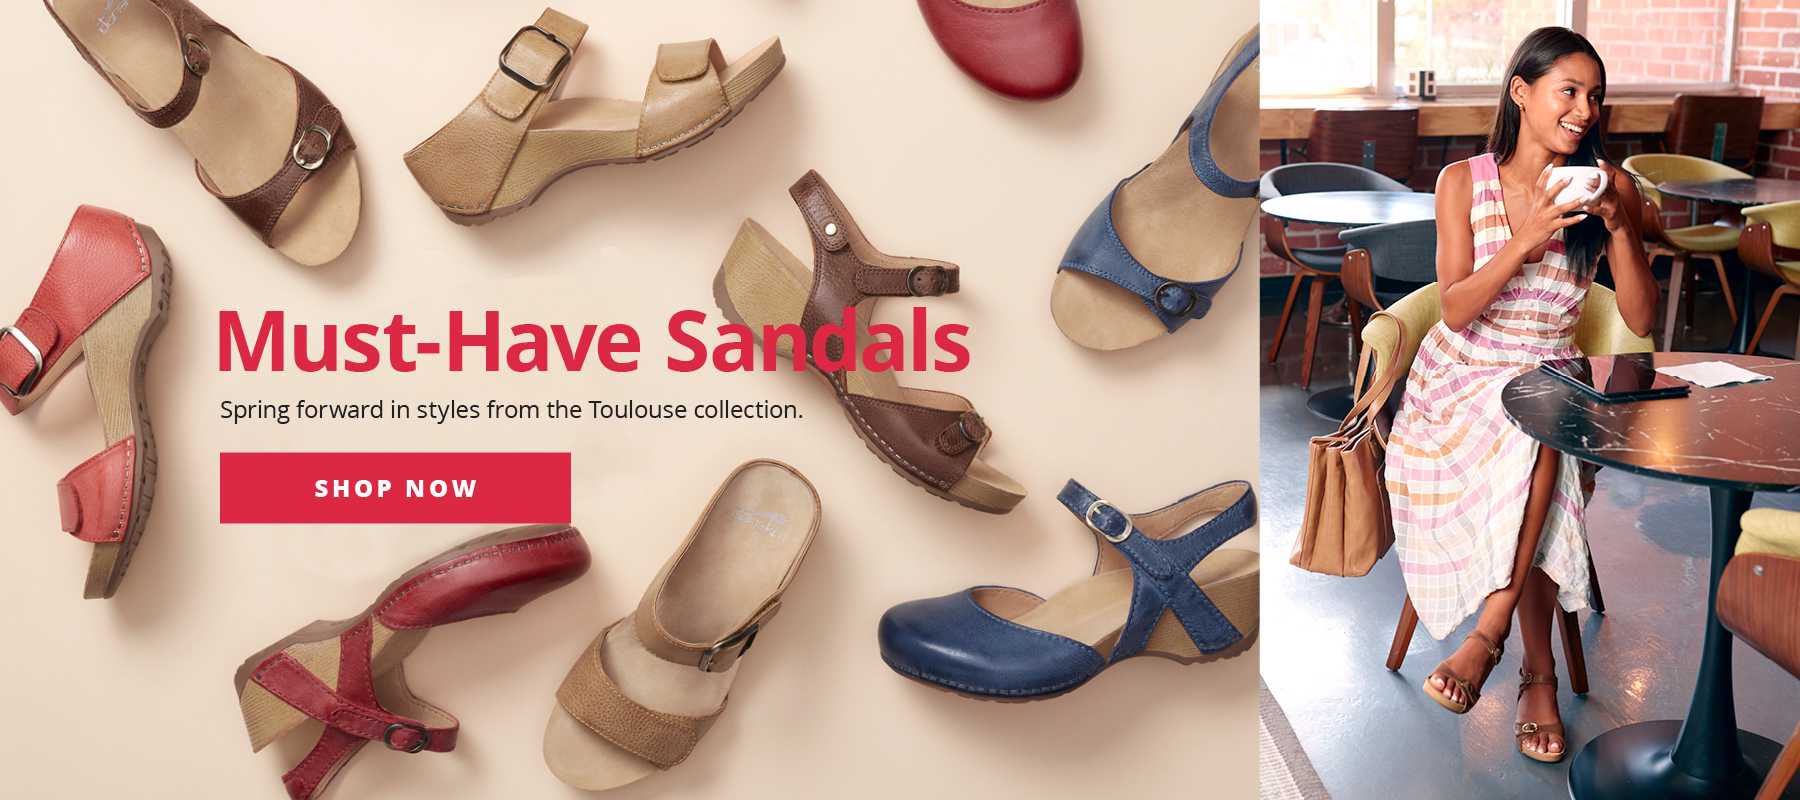 Dansko women's Sandals Toulouse Collection